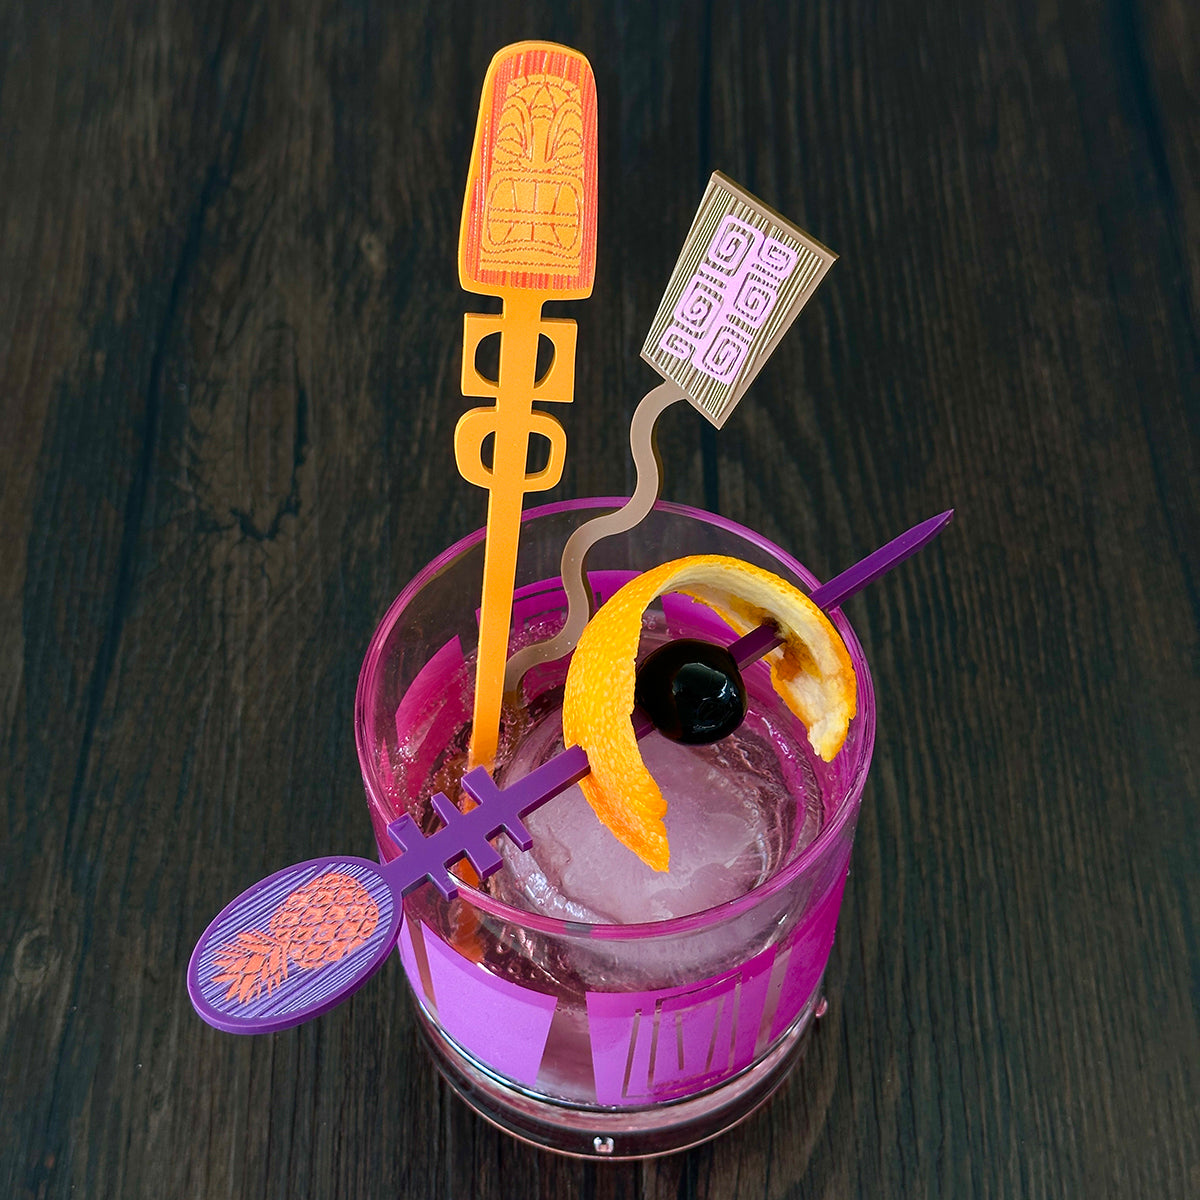 tiki design swizzle sticks in an old fashioned acrylic glass with an orange peel